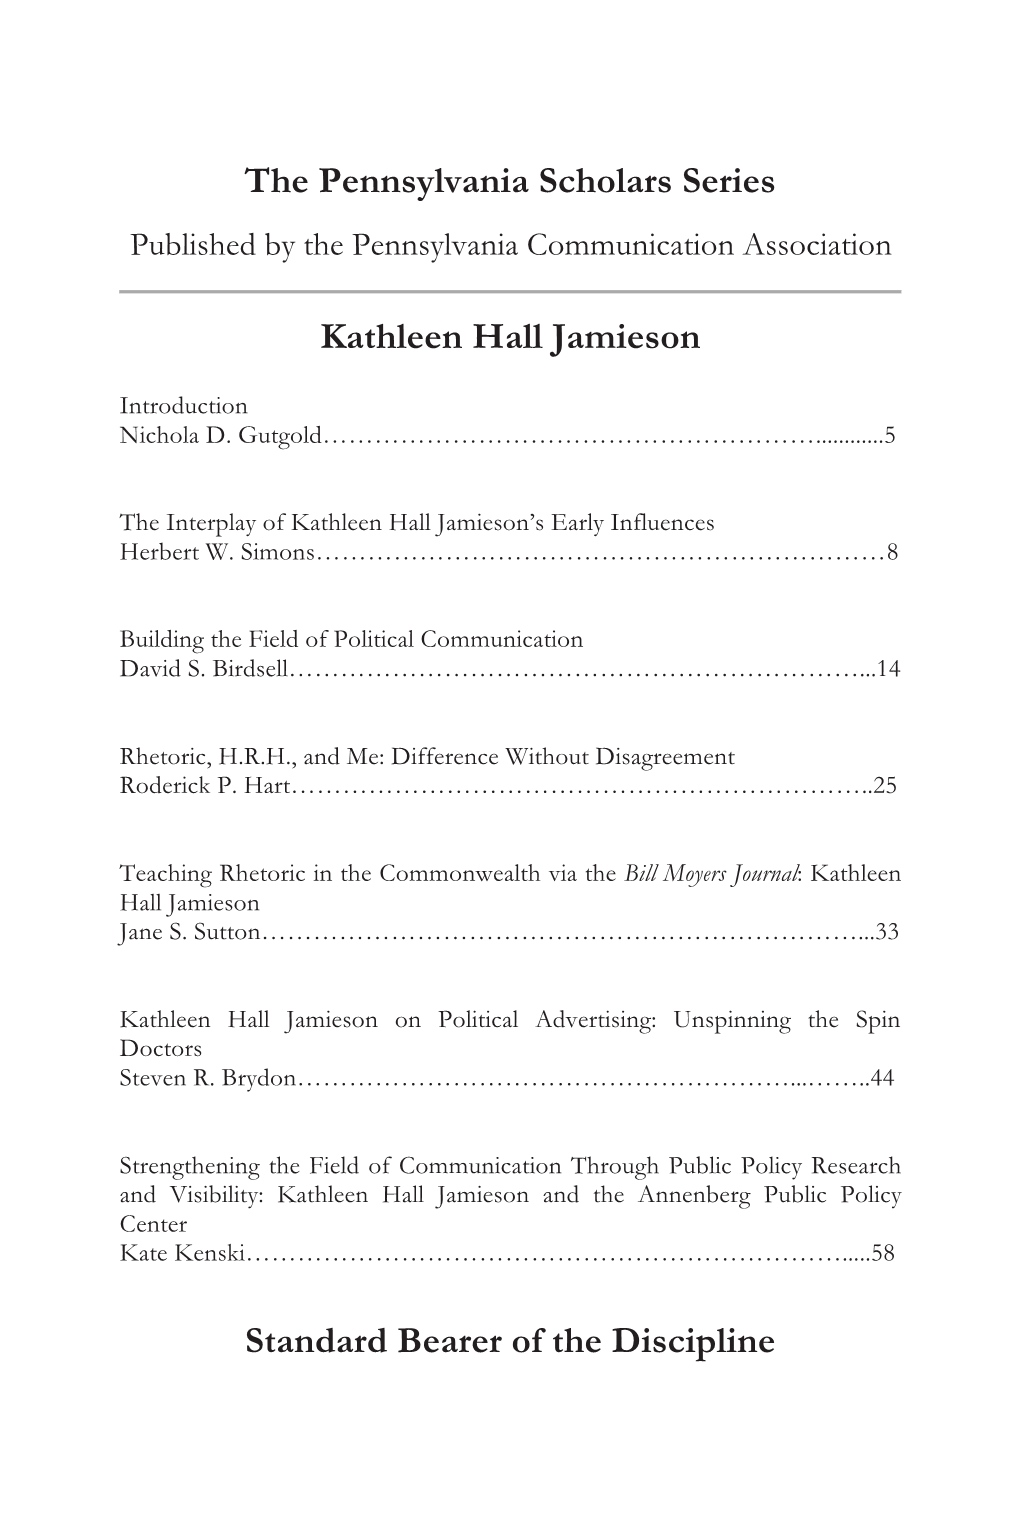 The Pennsylvania Scholars Series Kathleen Hall Jamieson Standard